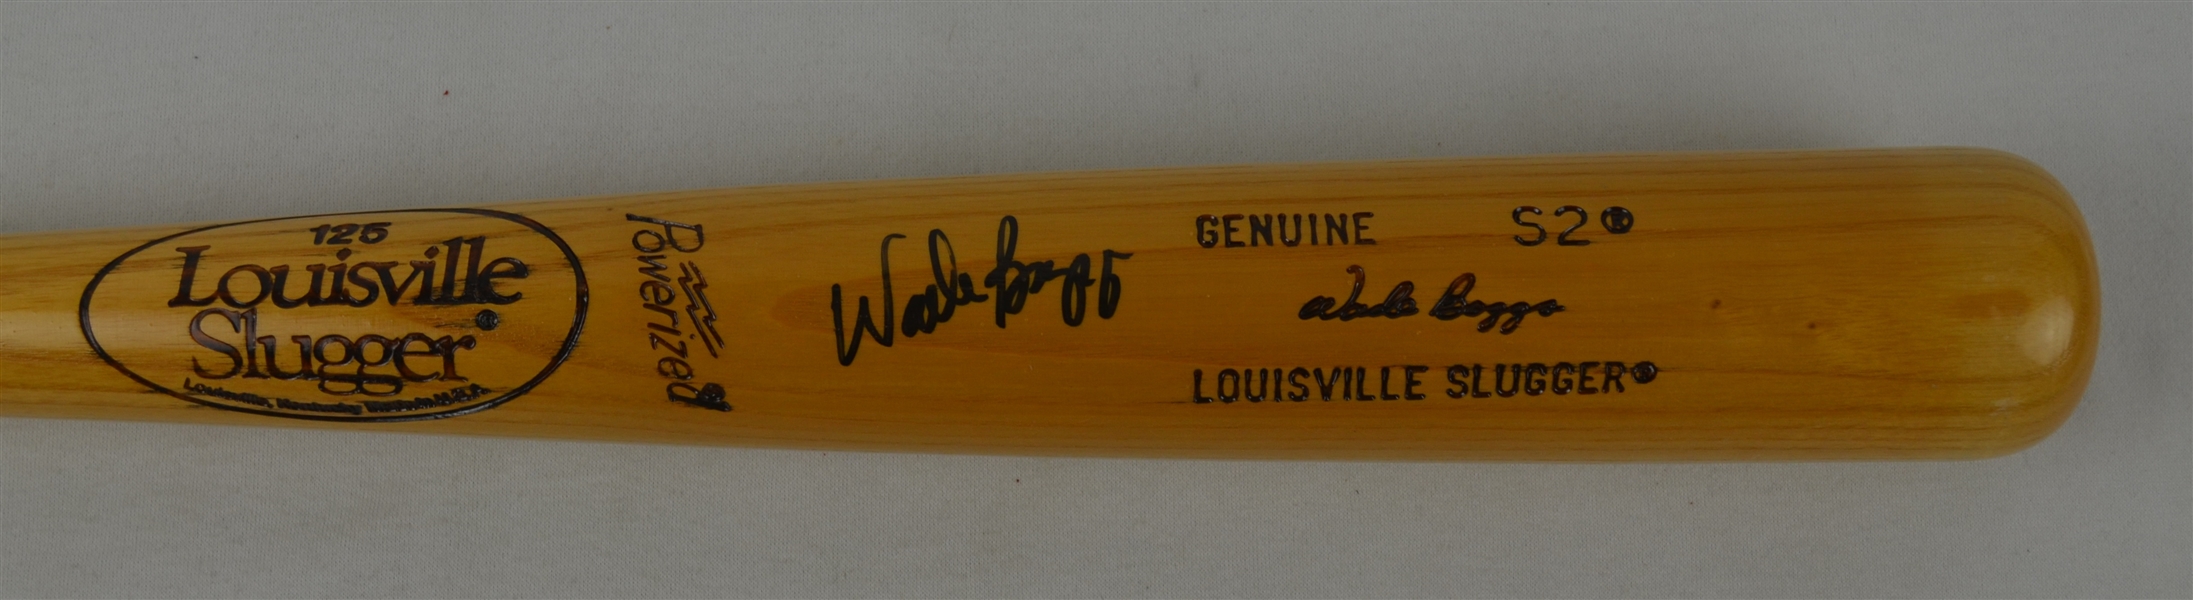 Wade Boggs Autographed Signature Model Louisville Slugger Bat